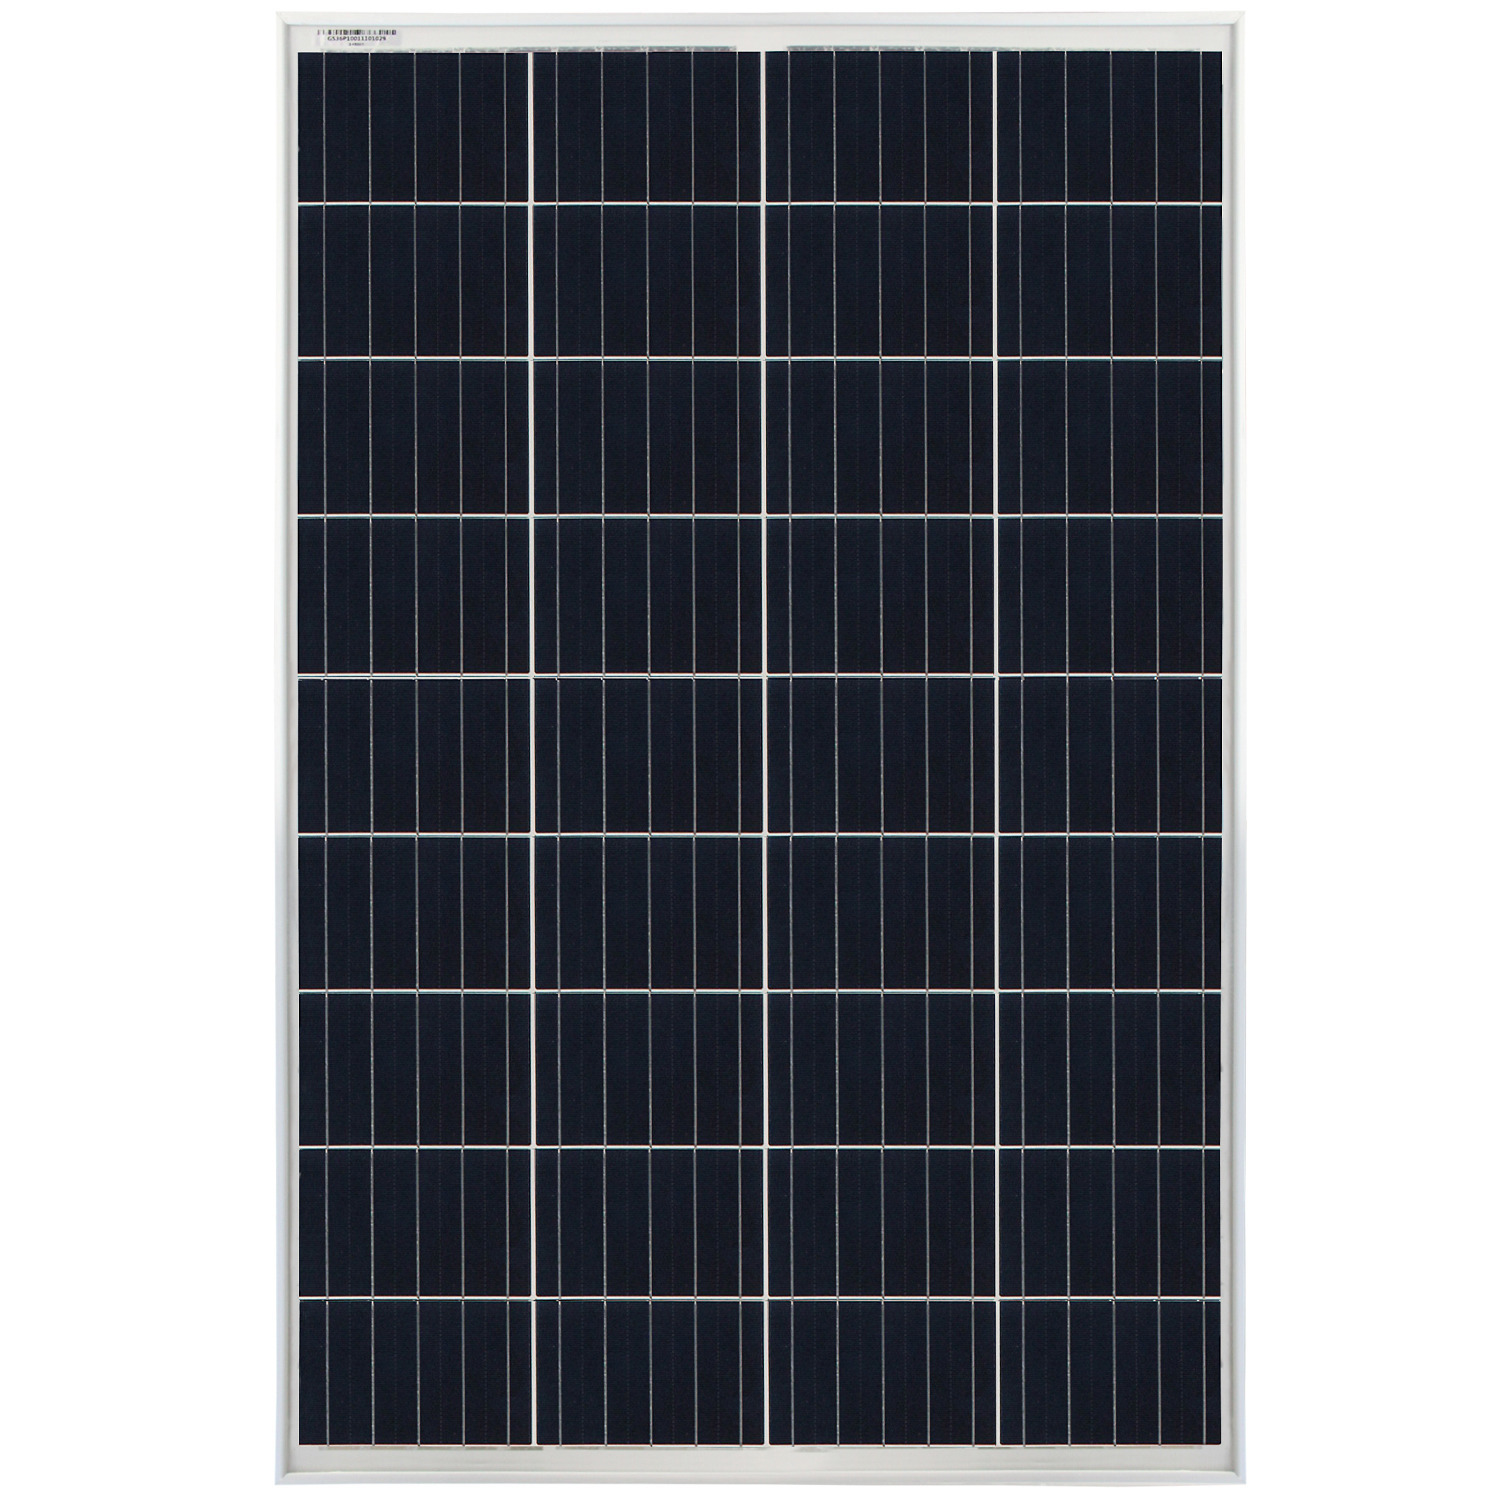 100 watt off grid solar power system - 100w 12v -18v high efficiency polycrystalline solar panel module battery charger for marine and RV solar battery